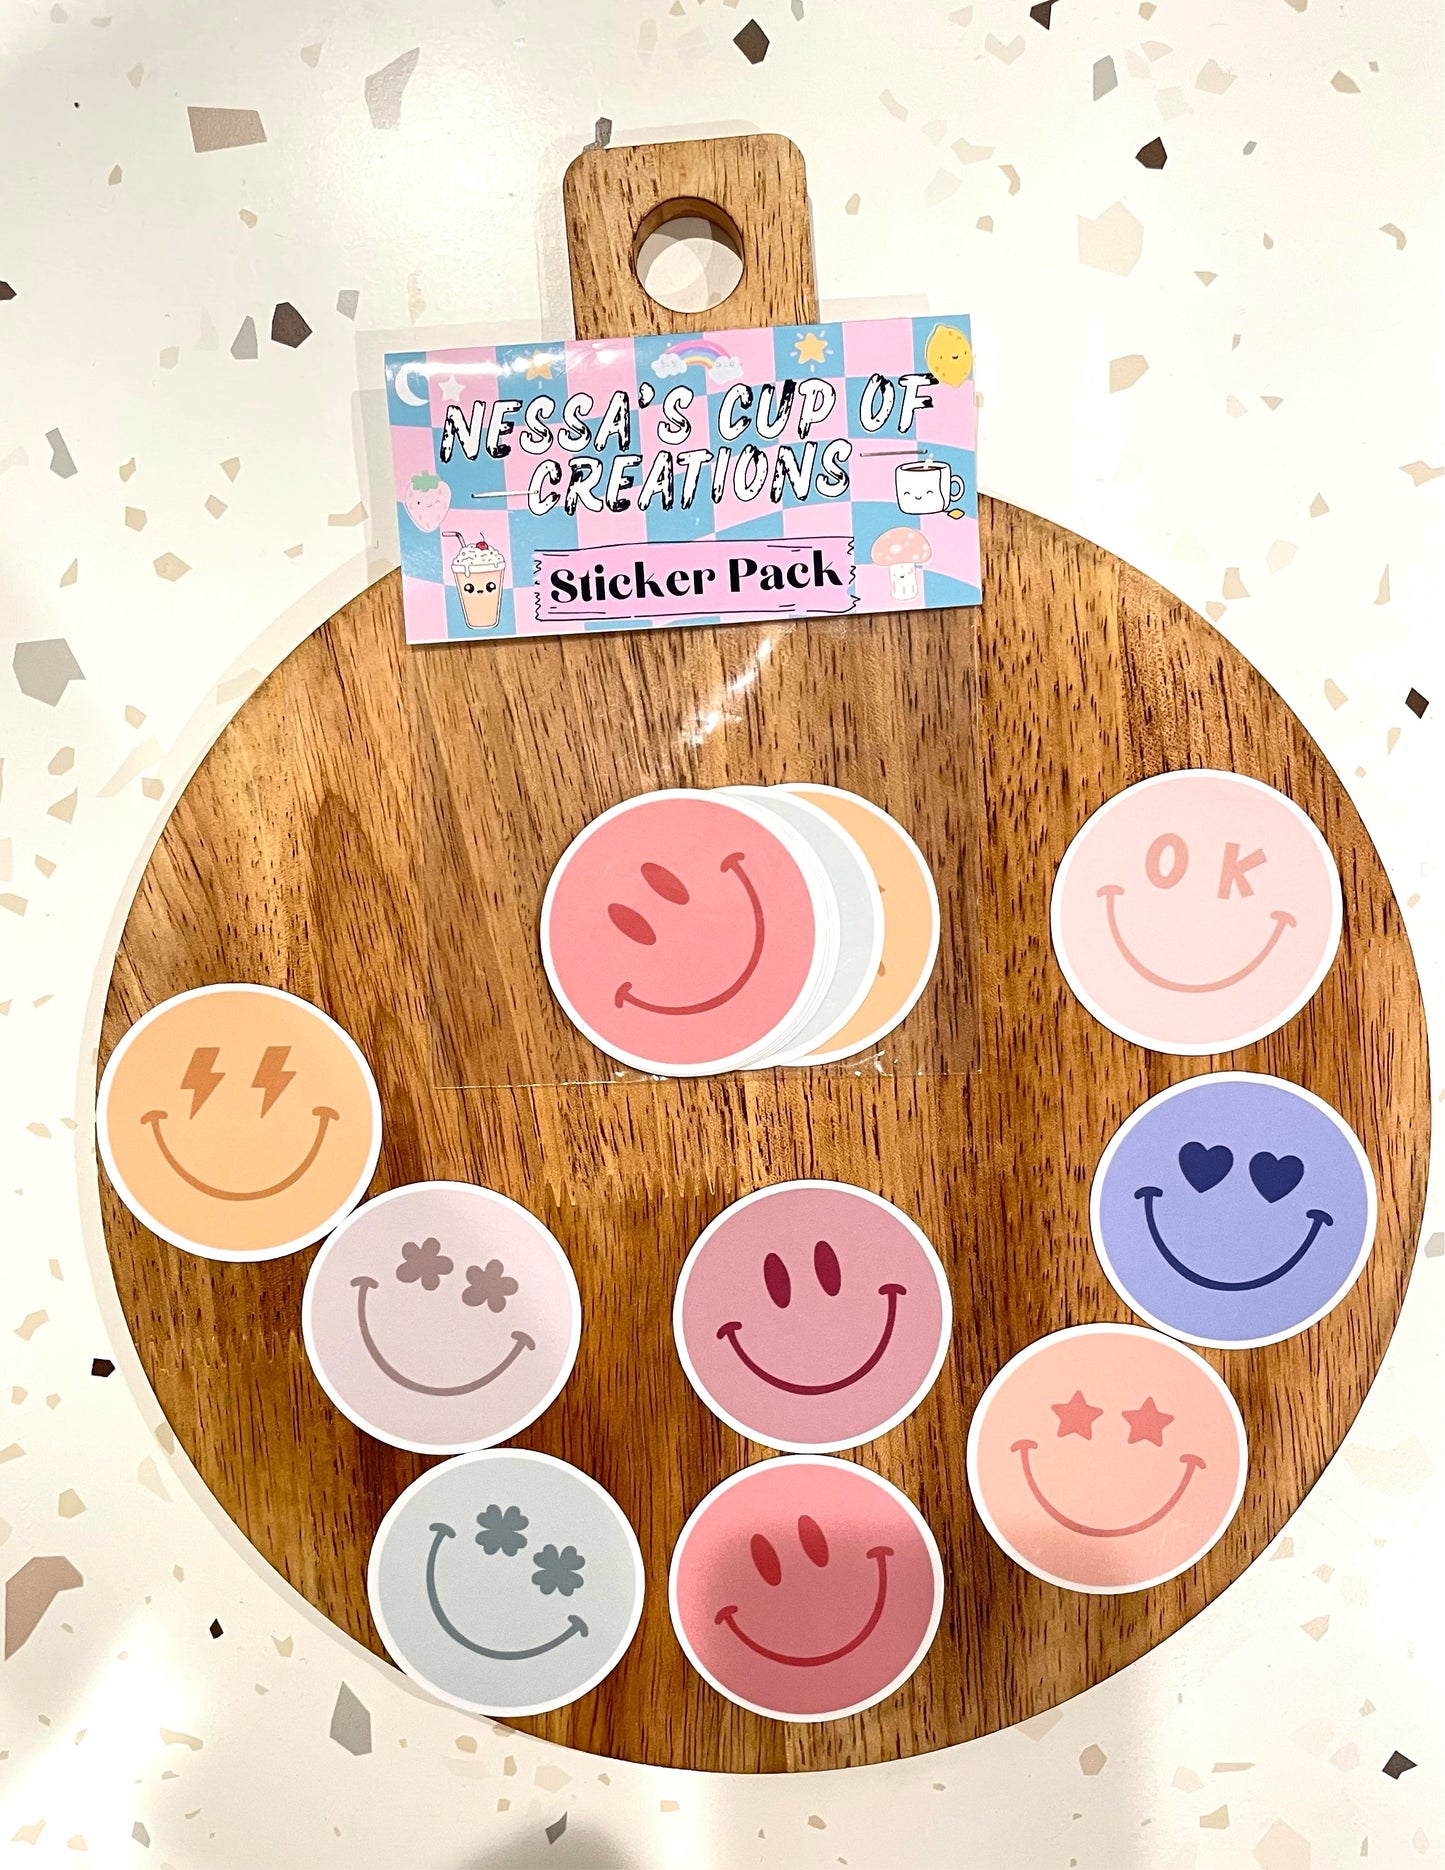 Nessa's Sticker Pack - Smiley Face